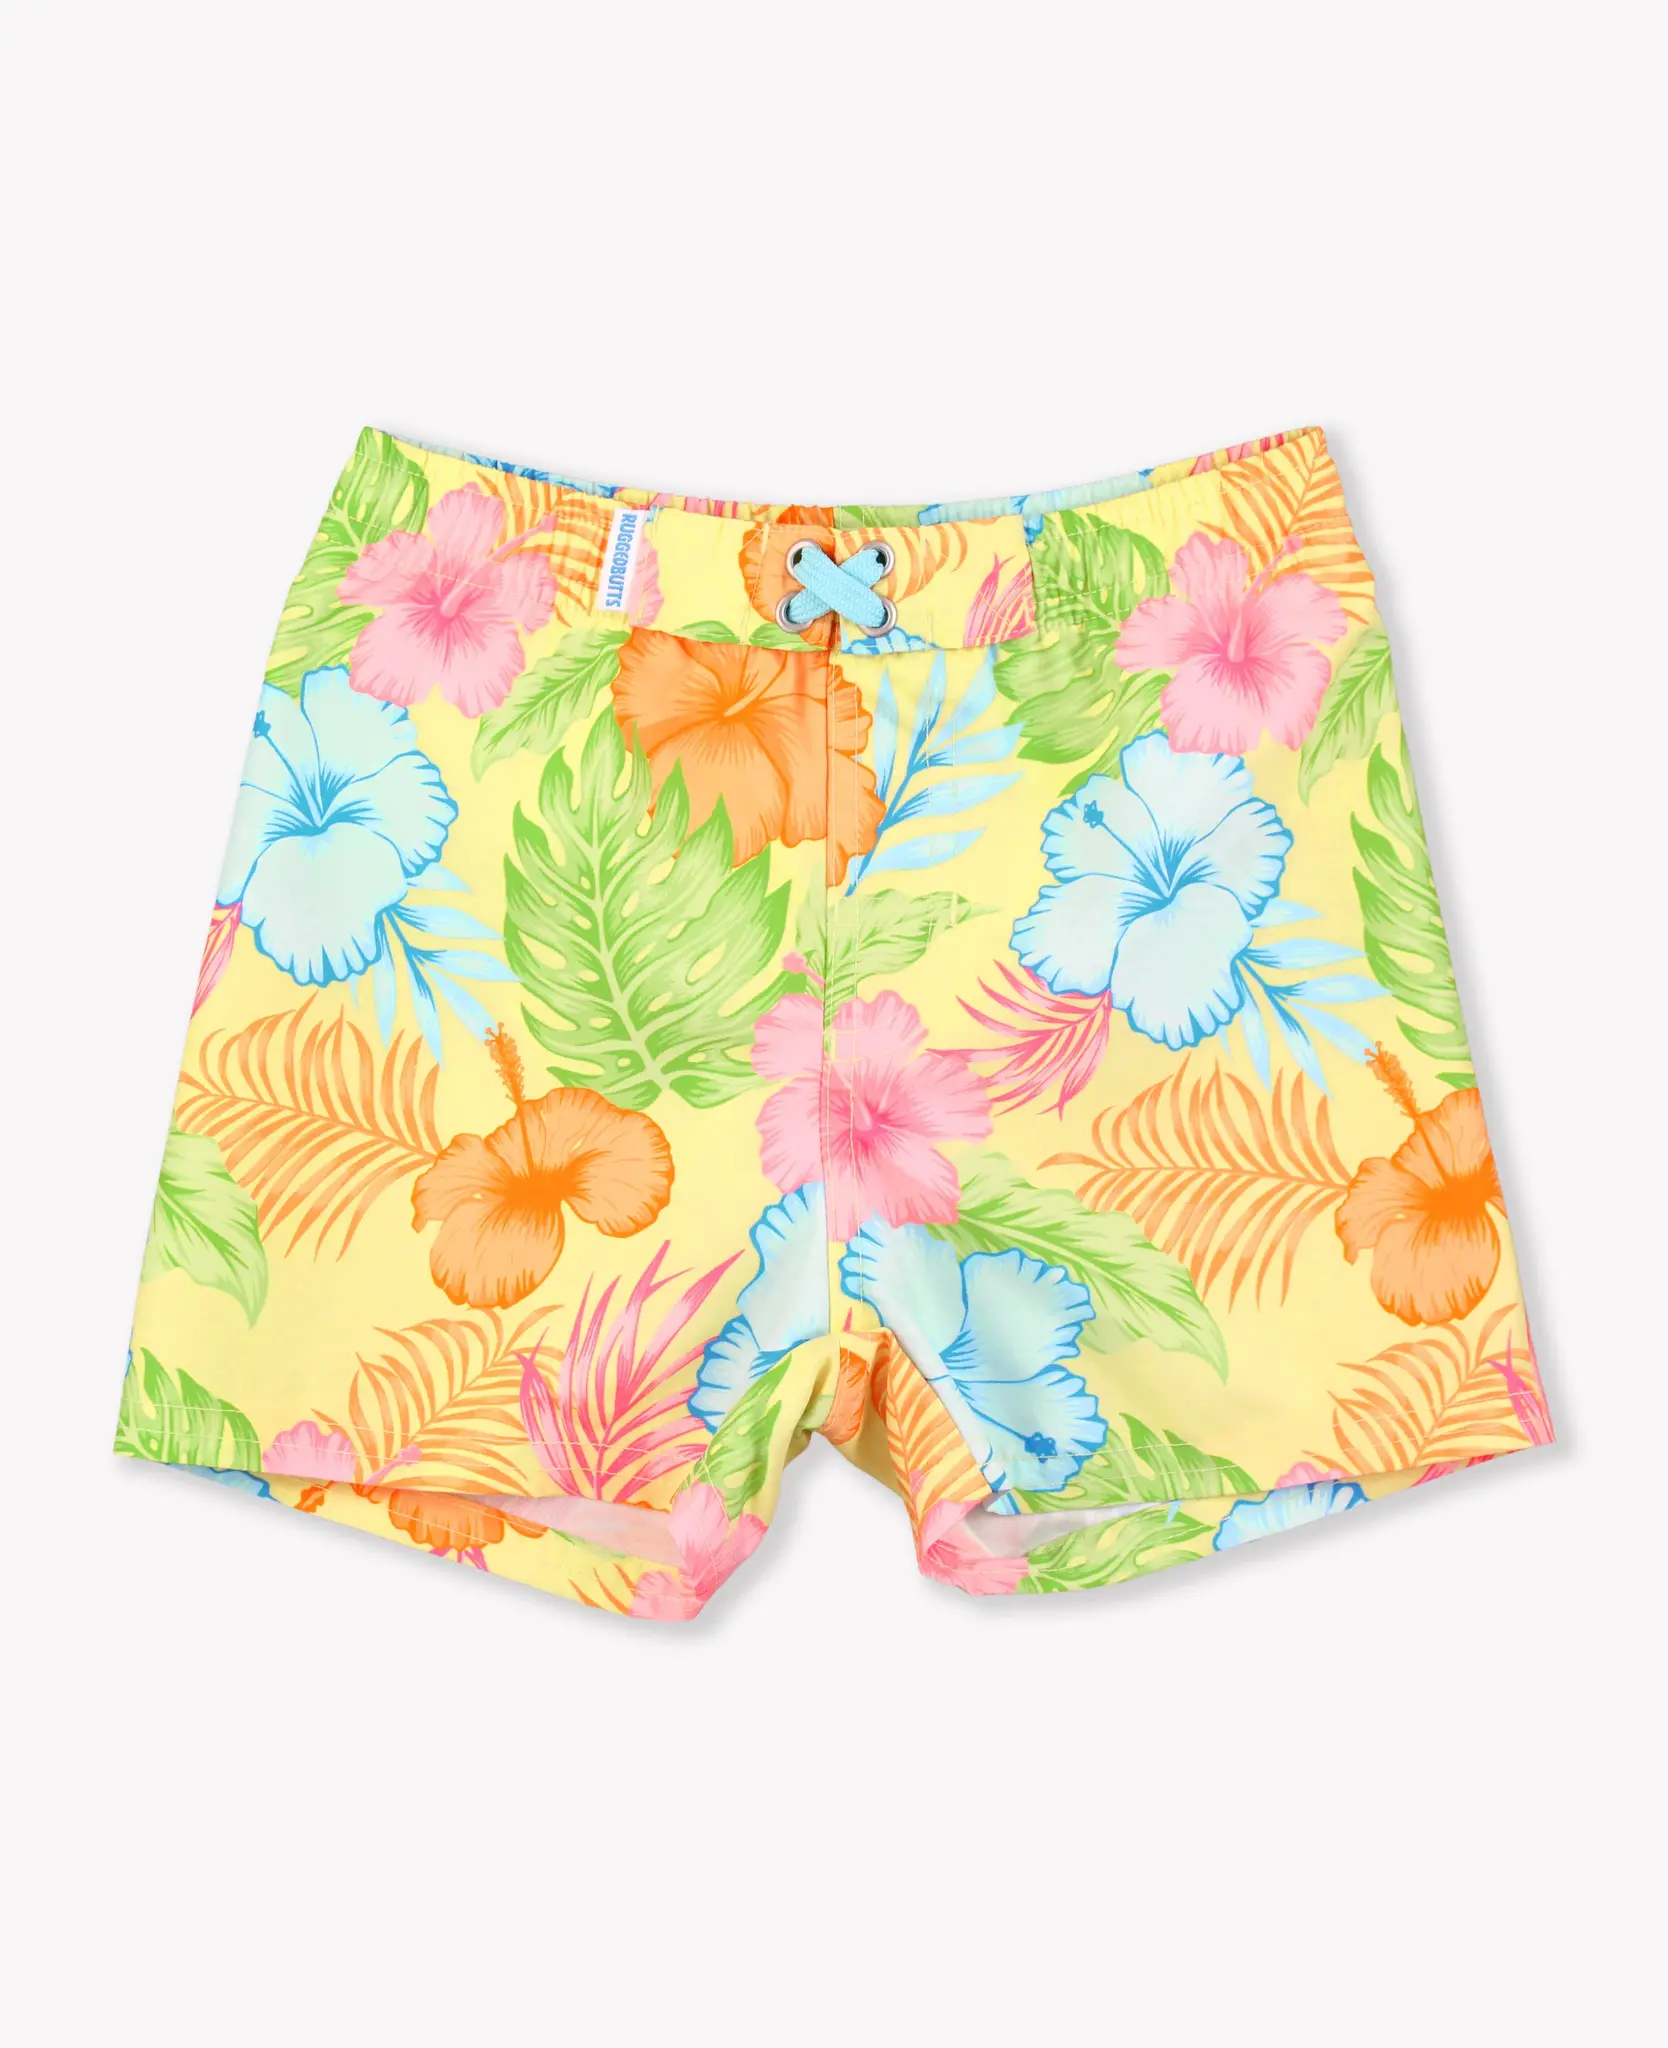 Ruffle Butts/Rugged Butts Happy Hula Swim Trunks